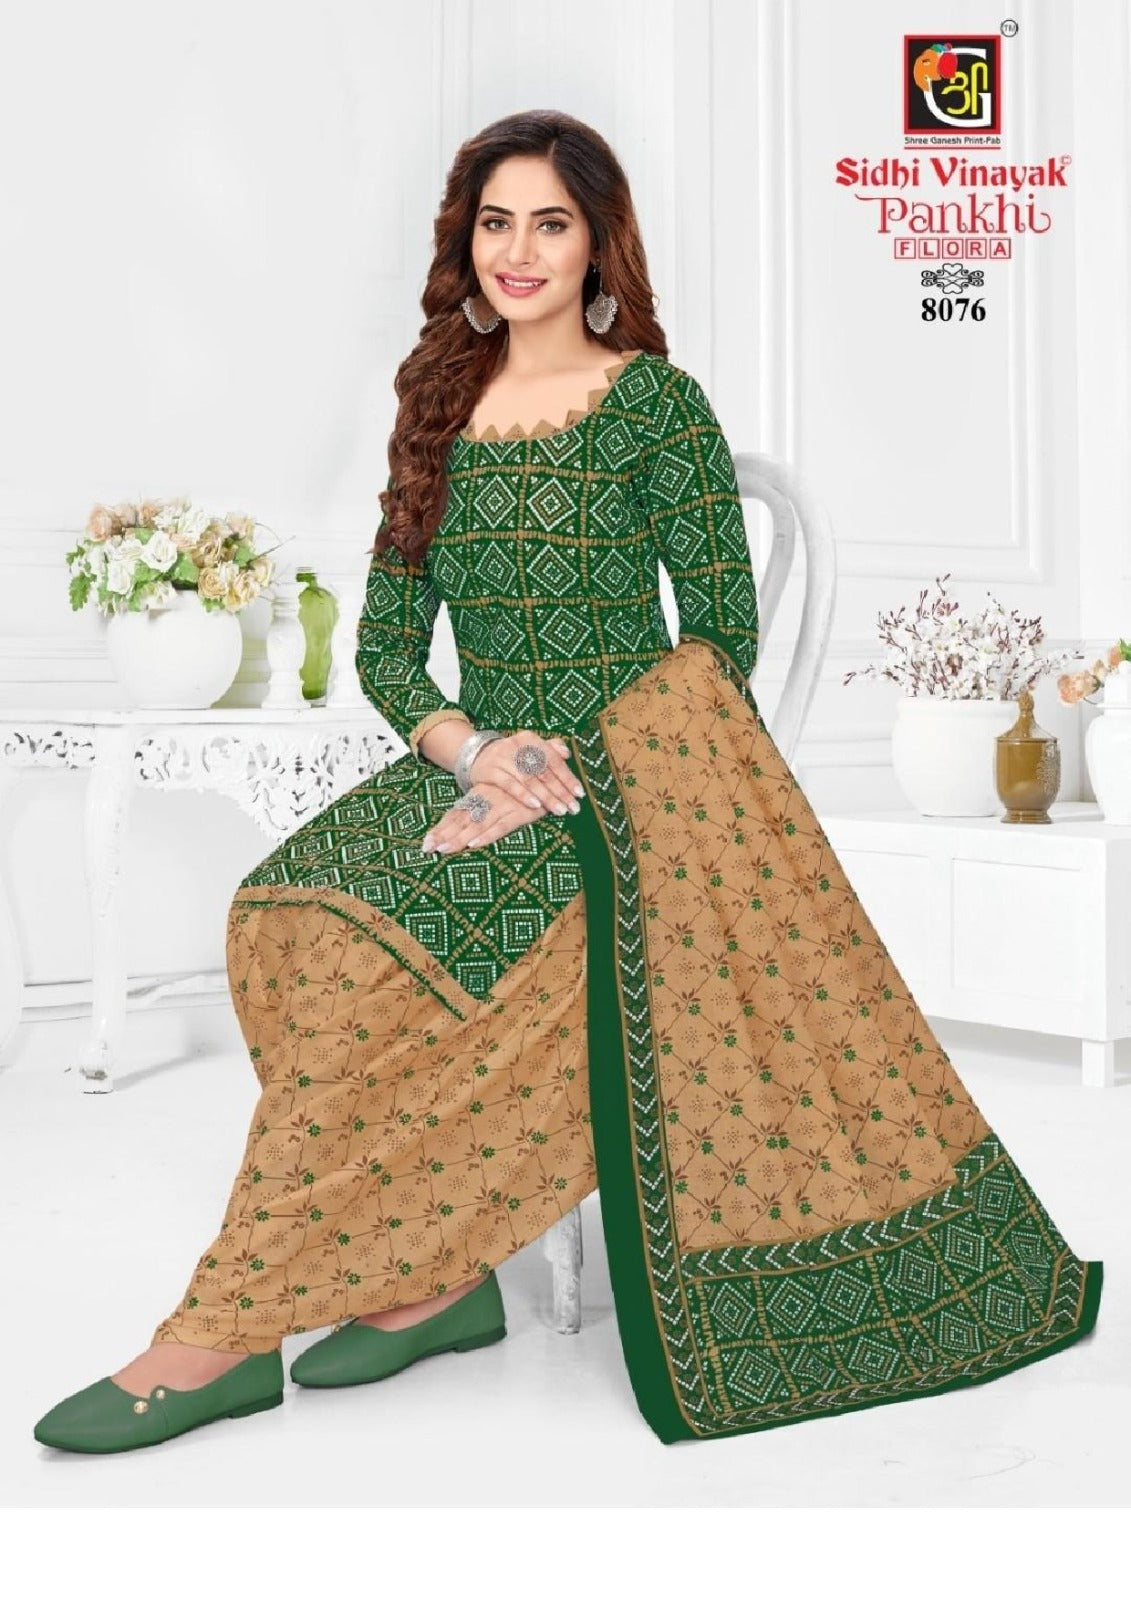 Pankhi Flora Sidhi Vinayak Cotton Dress Material